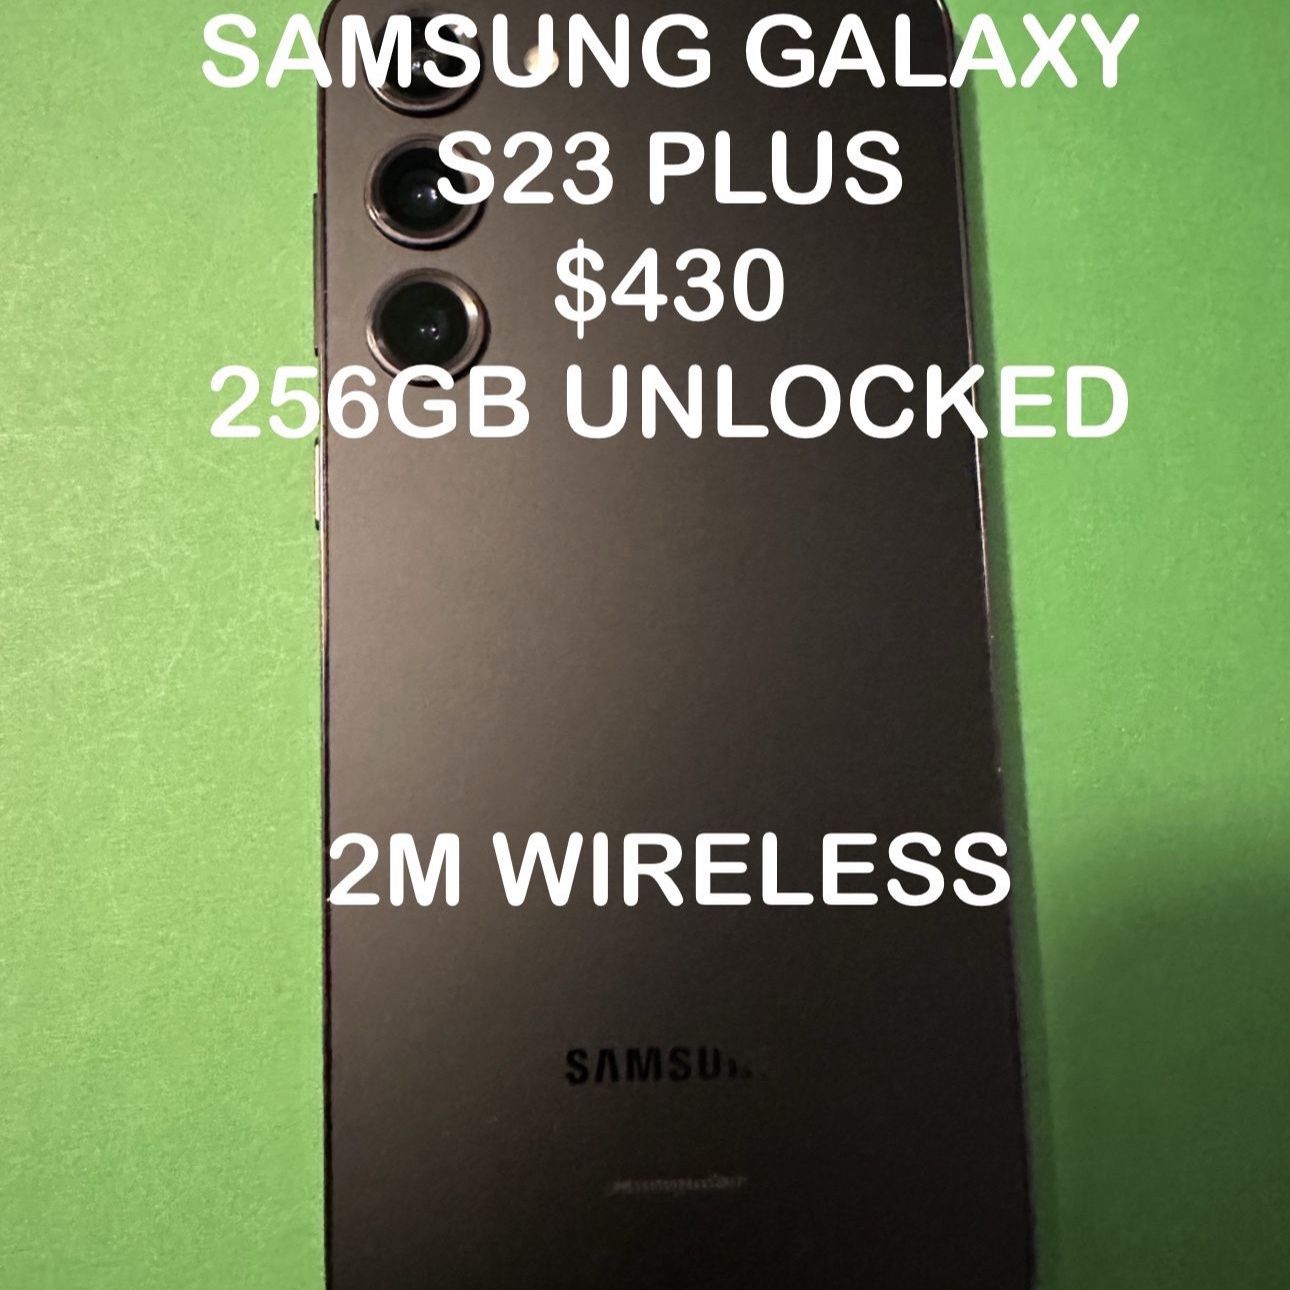 Samsung Galaxy S23 Plus Like New Unlocked 256gb Firm Price $430